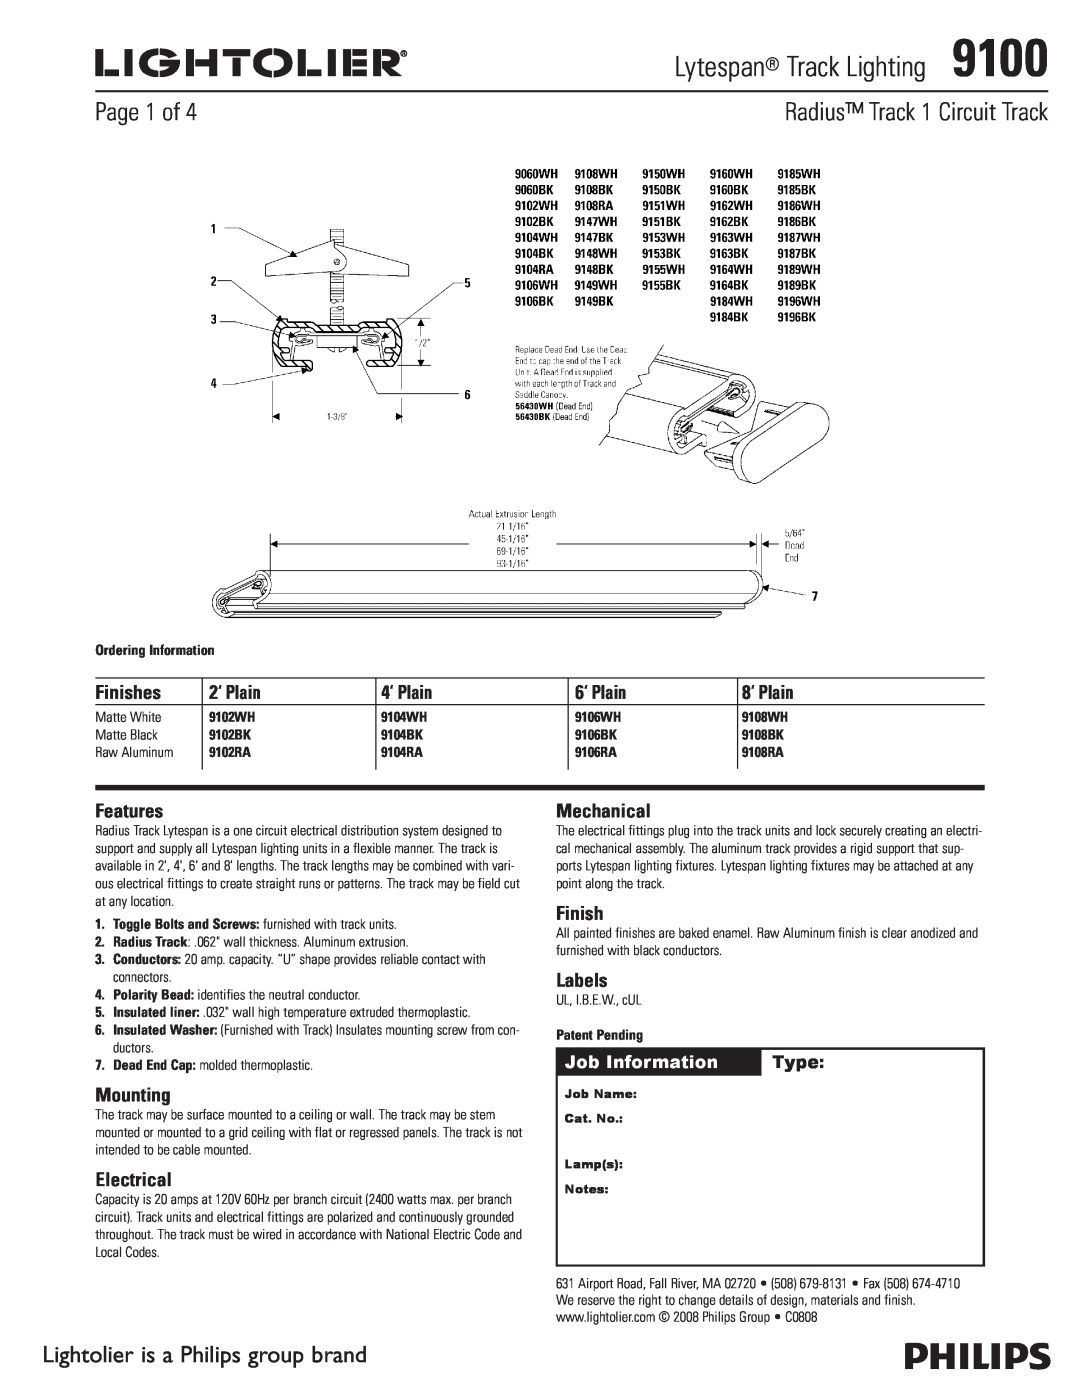 Lightolier manual Lytespan Track Lighting9100, Radius Track 1 Circuit Track, Page 1 of, Finishes, 2‘ Plain, 4‘ Plain 